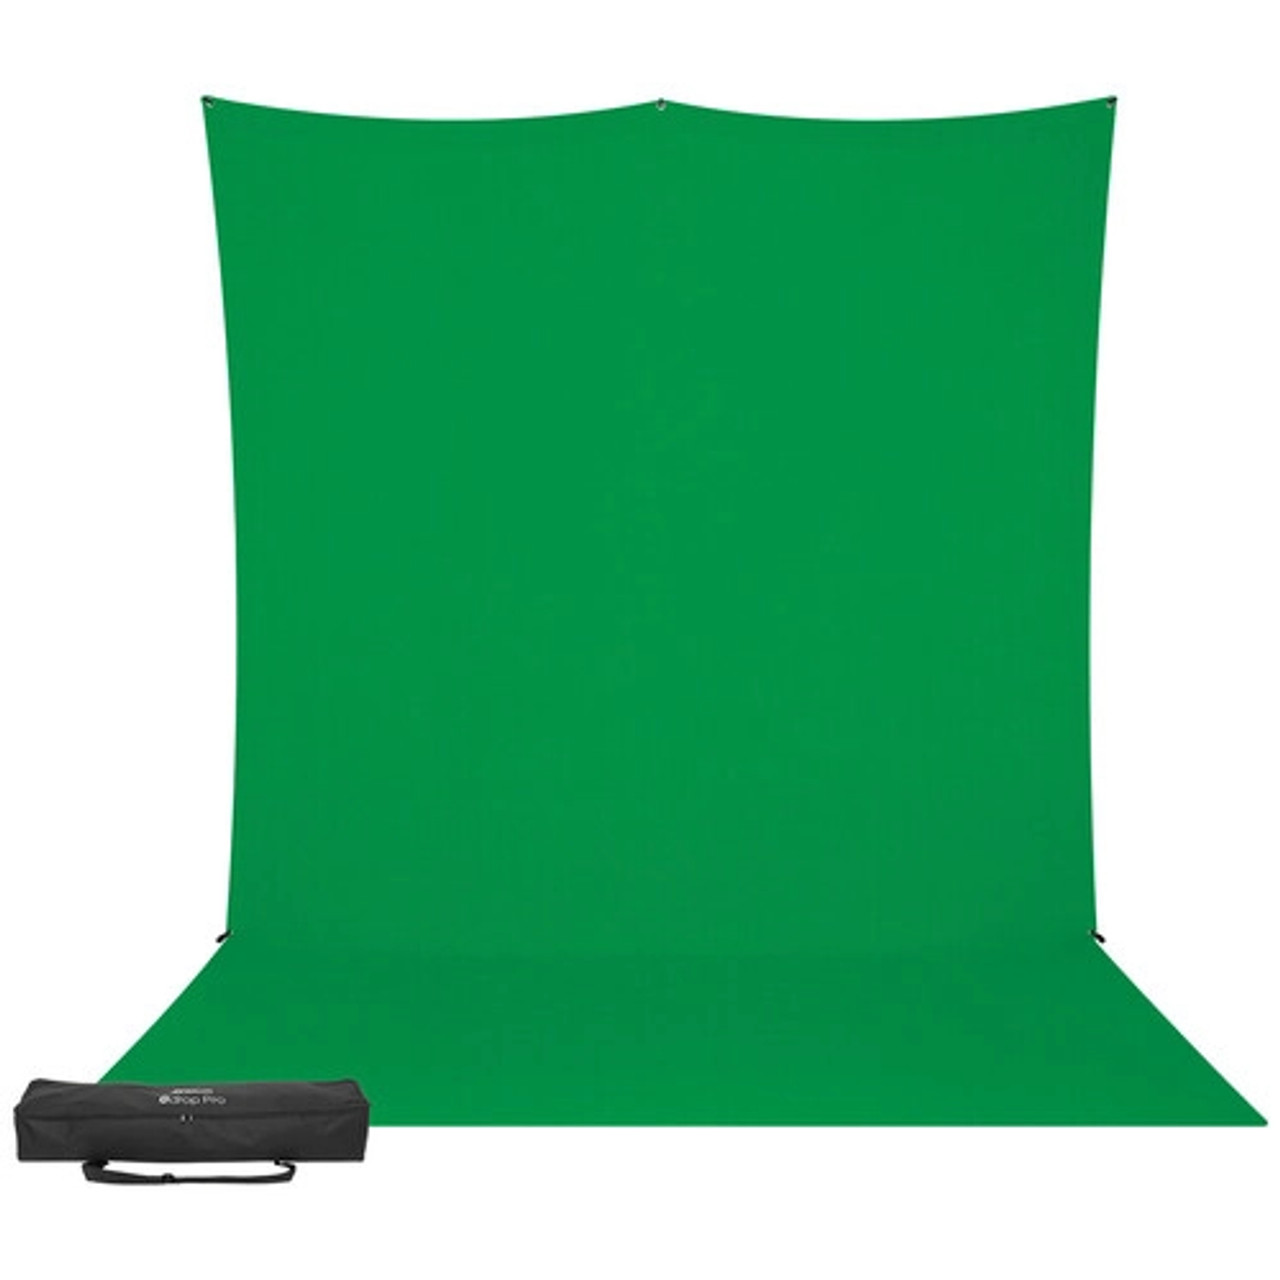 X-Drop Pro Wrinkle-Resistant Sweep Backdrop Kit - High-Key White (8' x 13')